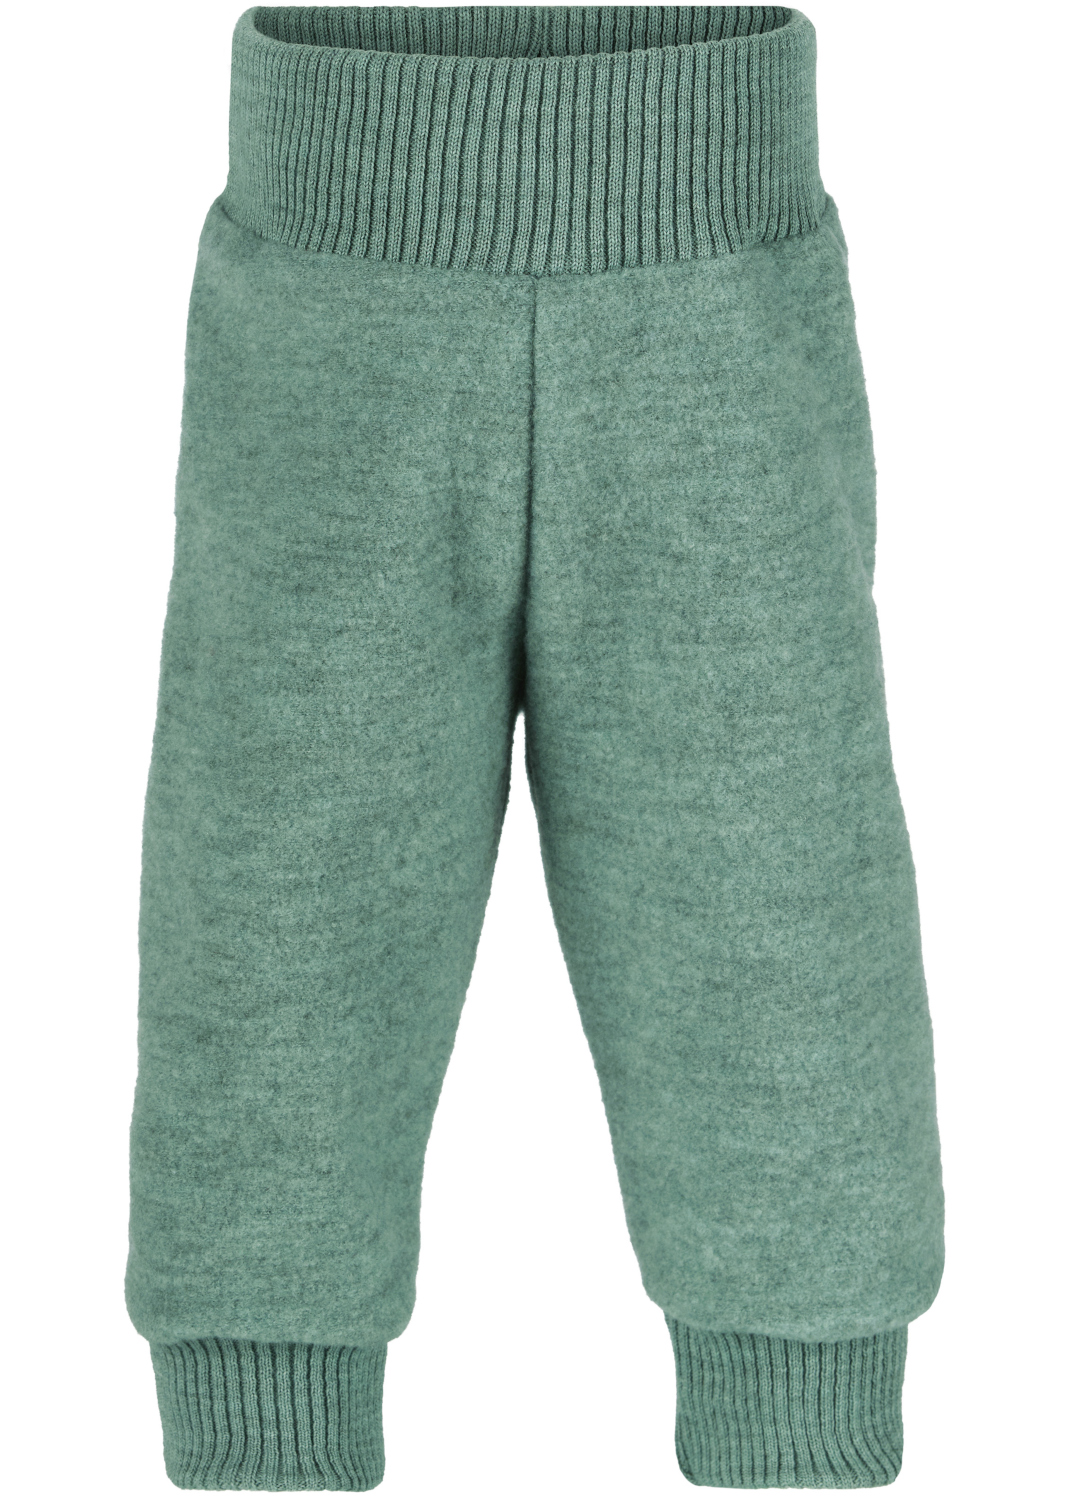 Pantaloni per bambini in pura lana cotta biologica_96007